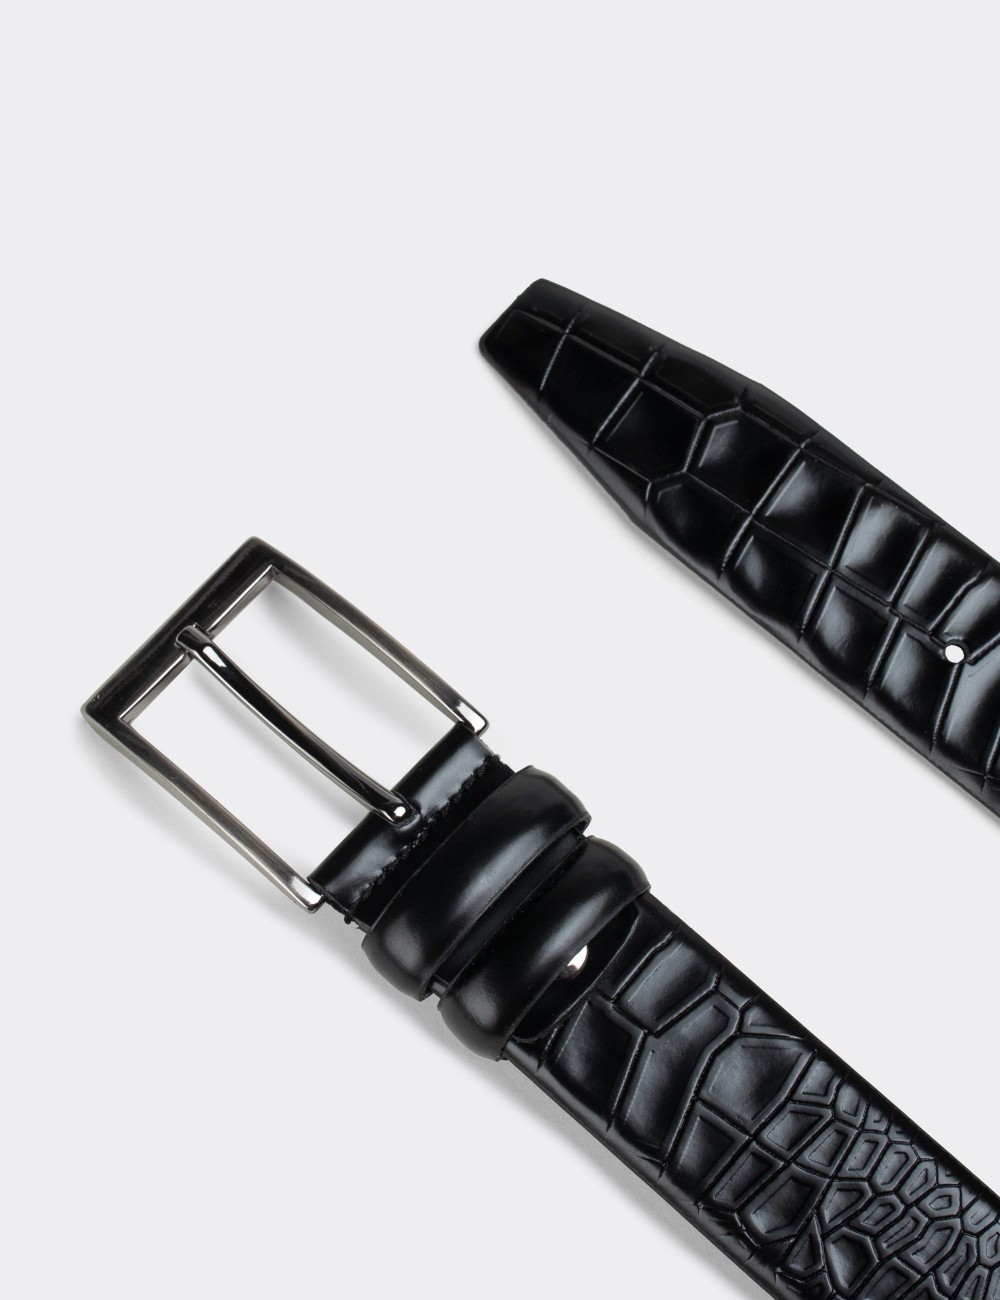  Leather Black Men's Belt - K0103MSYHW01